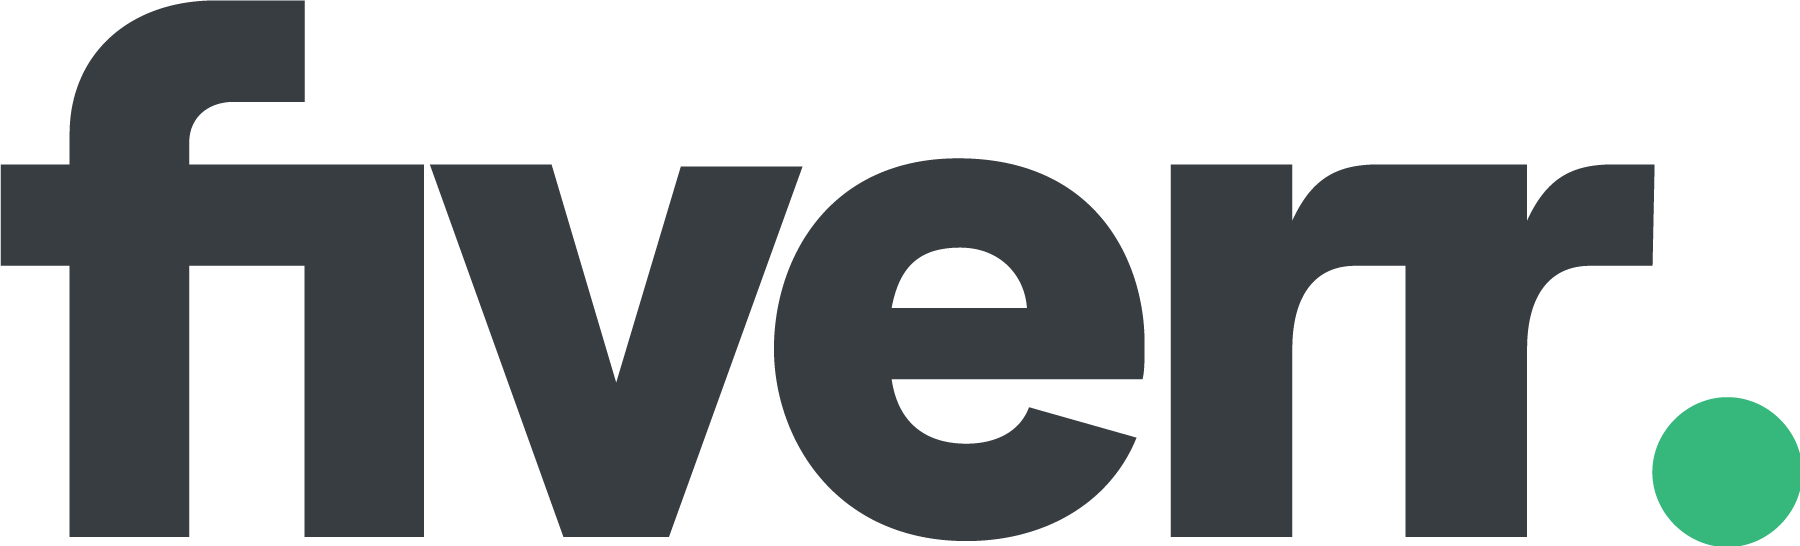 fiverr-logo-png